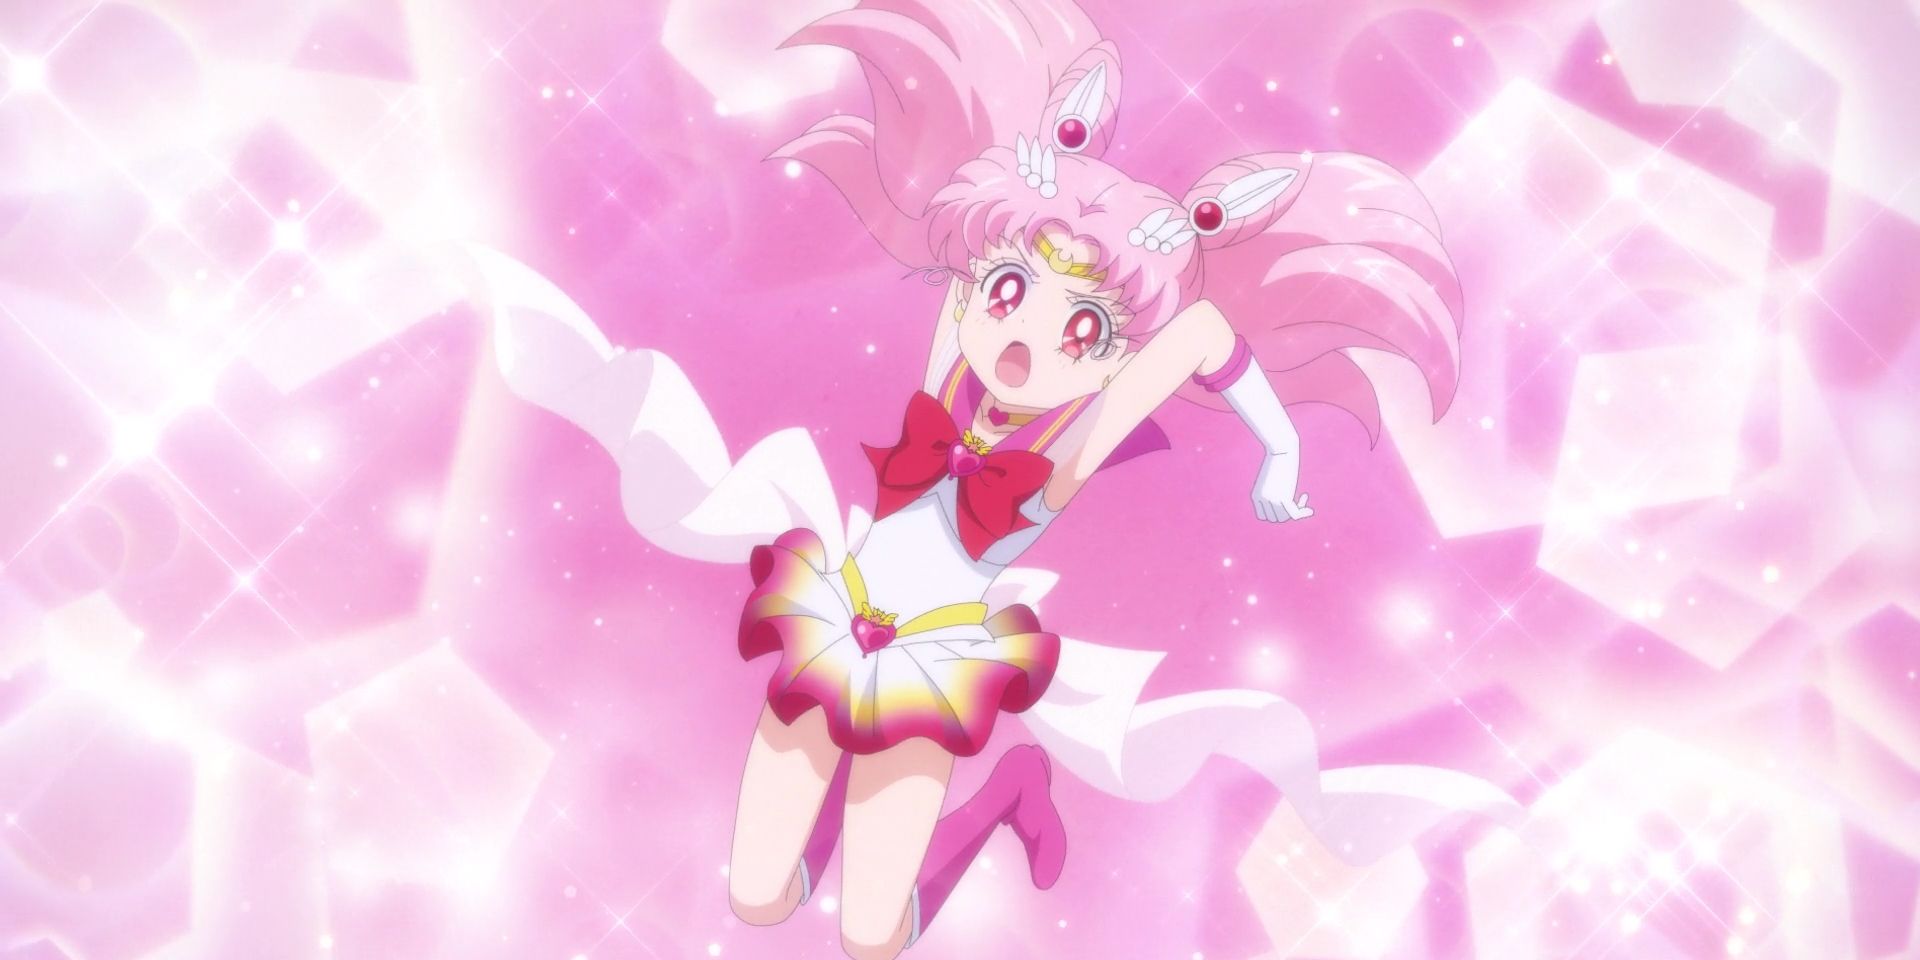 Chibi-Usa transforms into Super Sailor Chibi-Moon in Sailor Moon Eternal